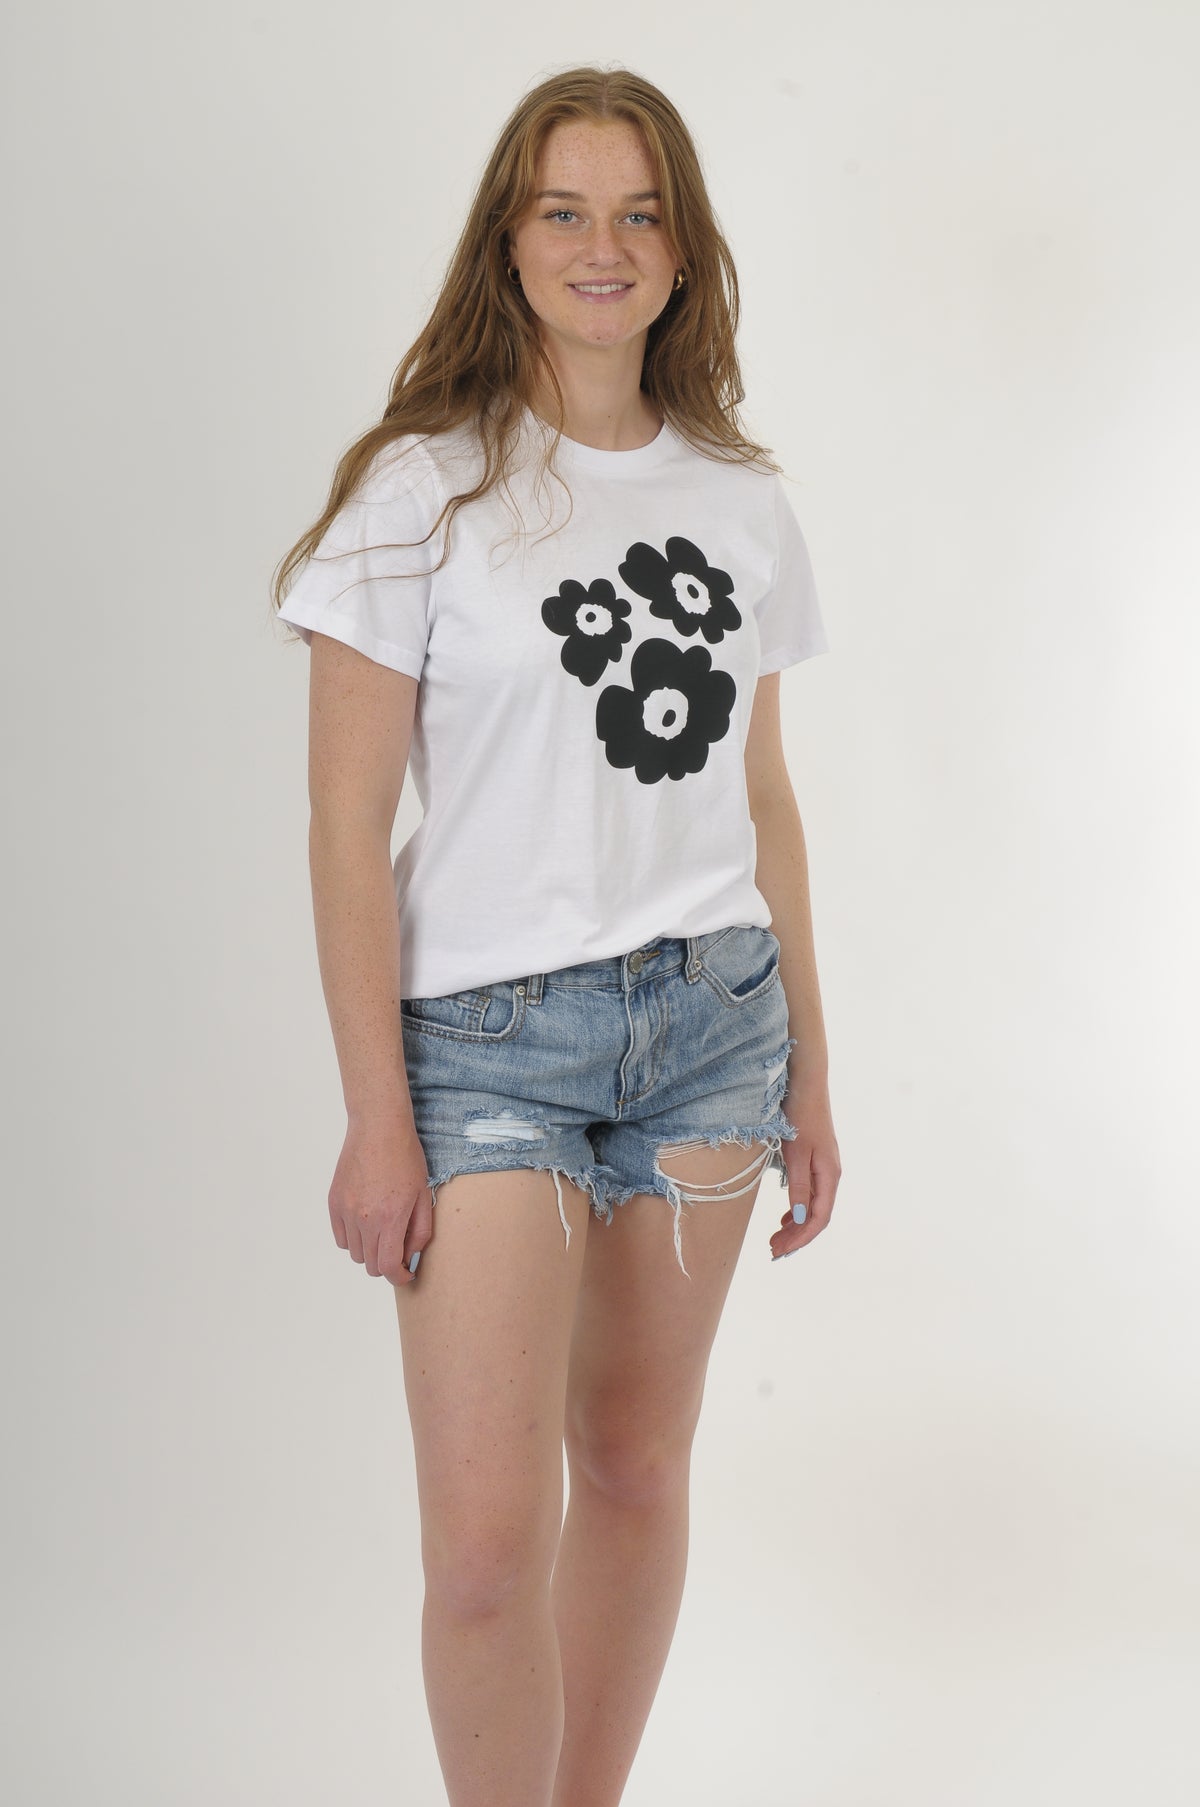 Tee Shirt - White with black 3 flower Print - Wadzee Print - Pre Order